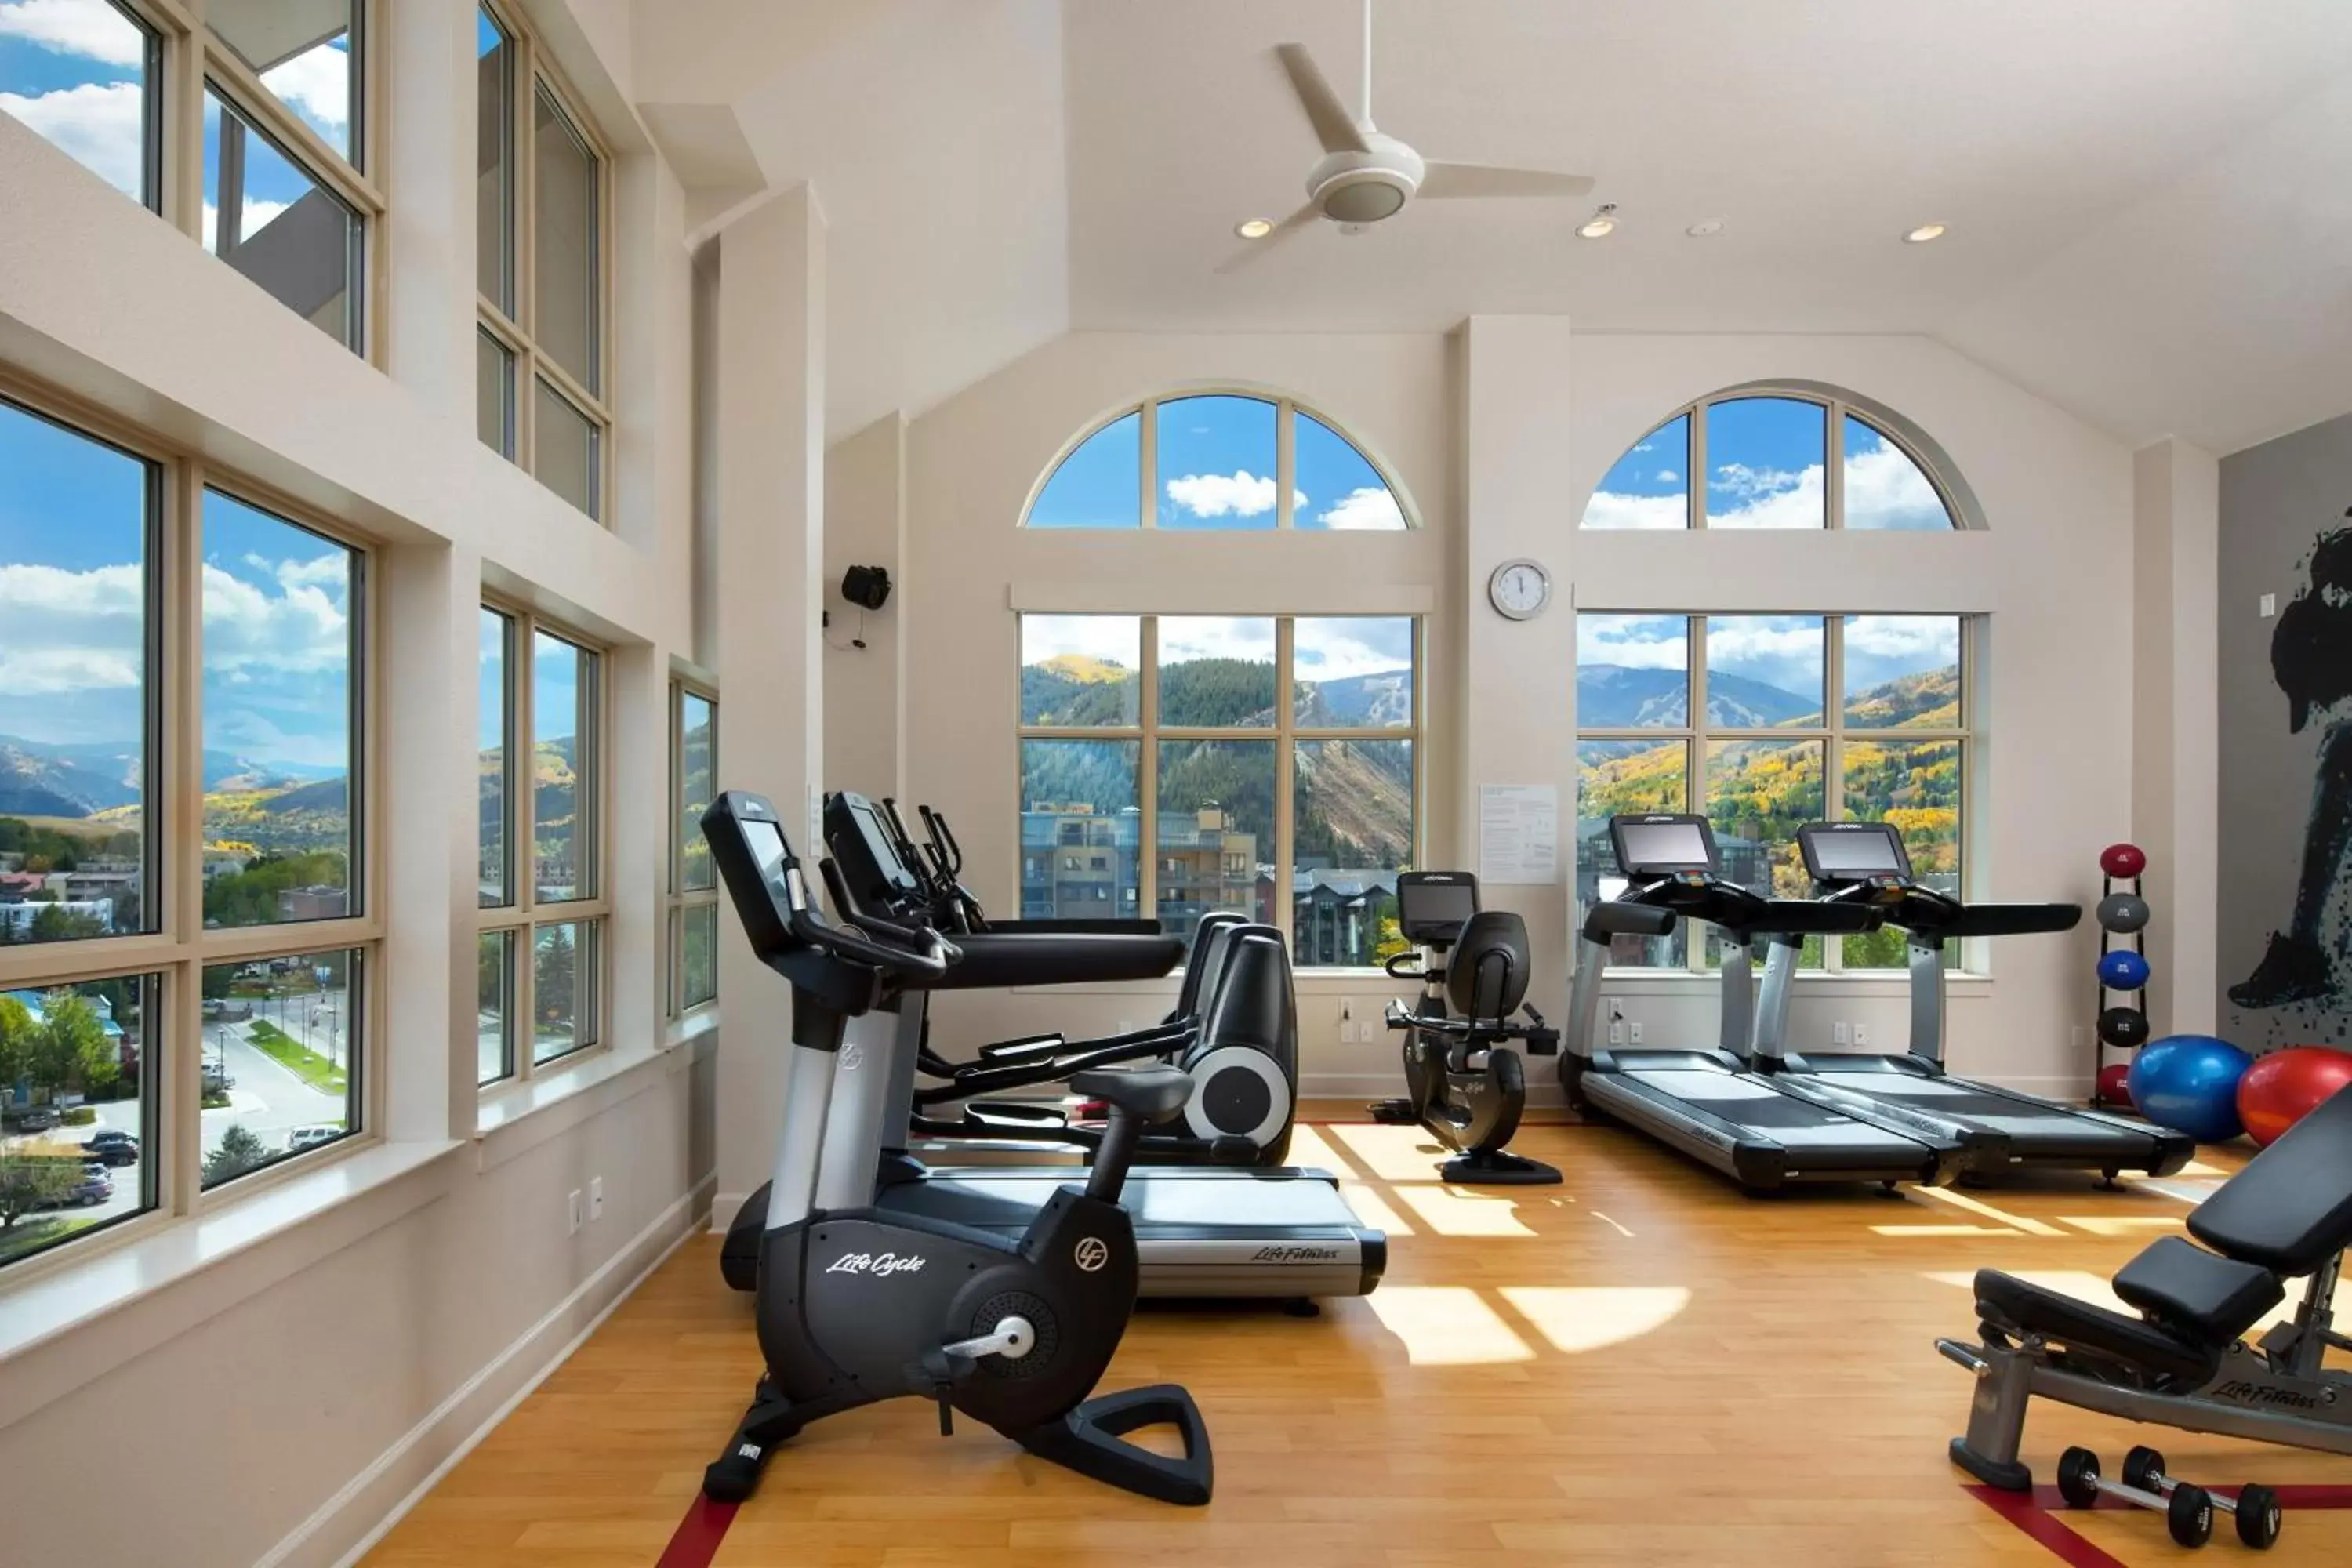 Fitness centre/facilities, Fitness Center/Facilities in Sheraton Mountain Vista Villas, Avon / Vail Valley